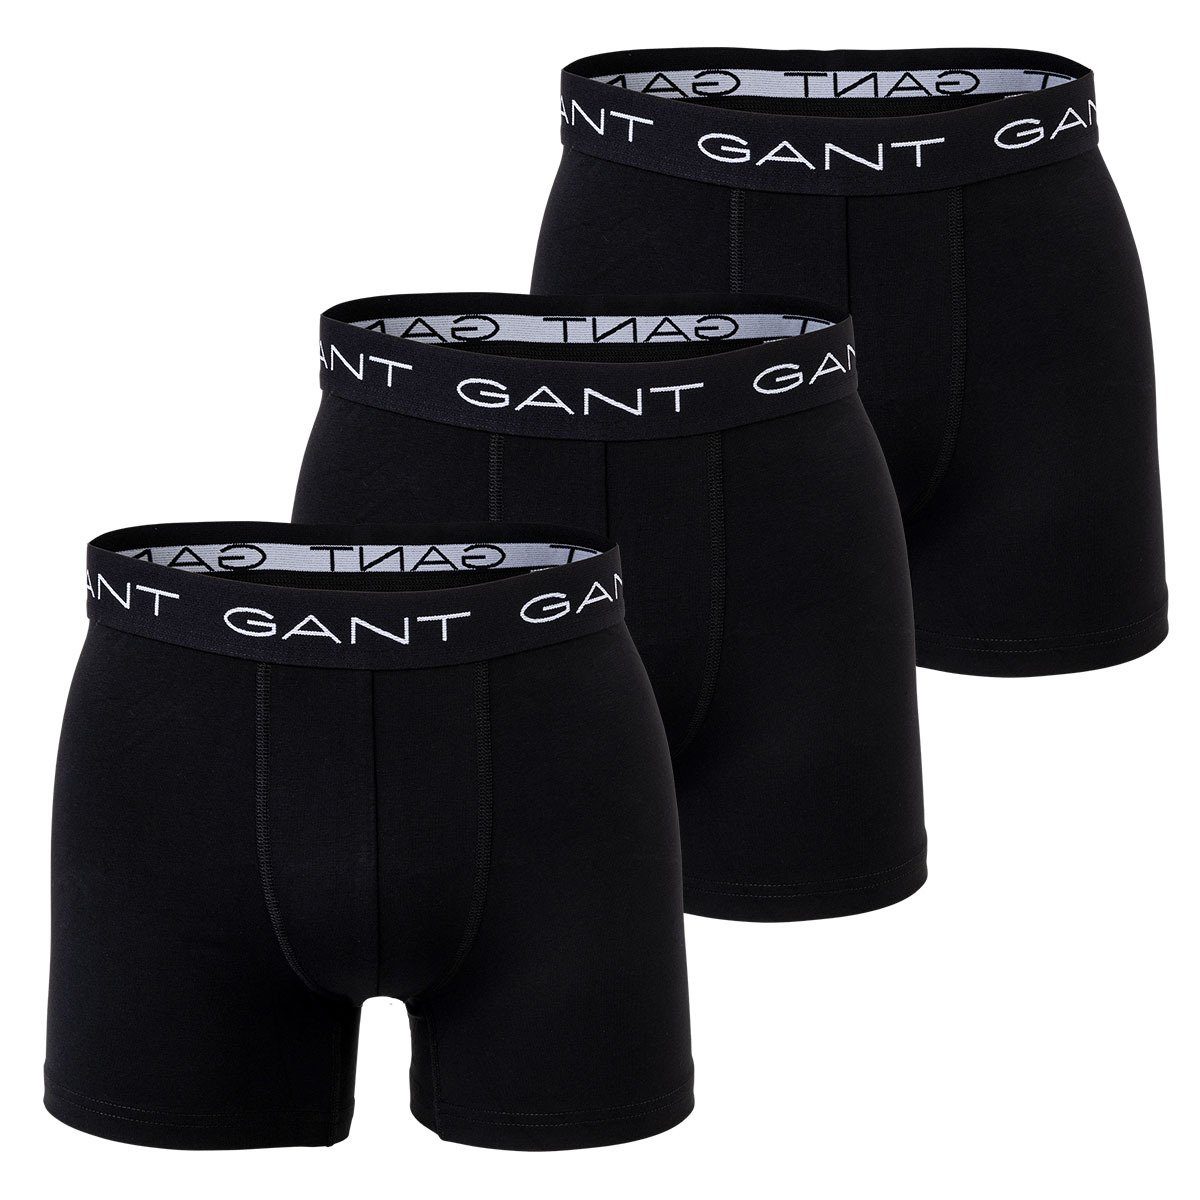 - Schwarz Pack Boxer Shorts, Herren Boxer 3er Gant Boxer Briefs